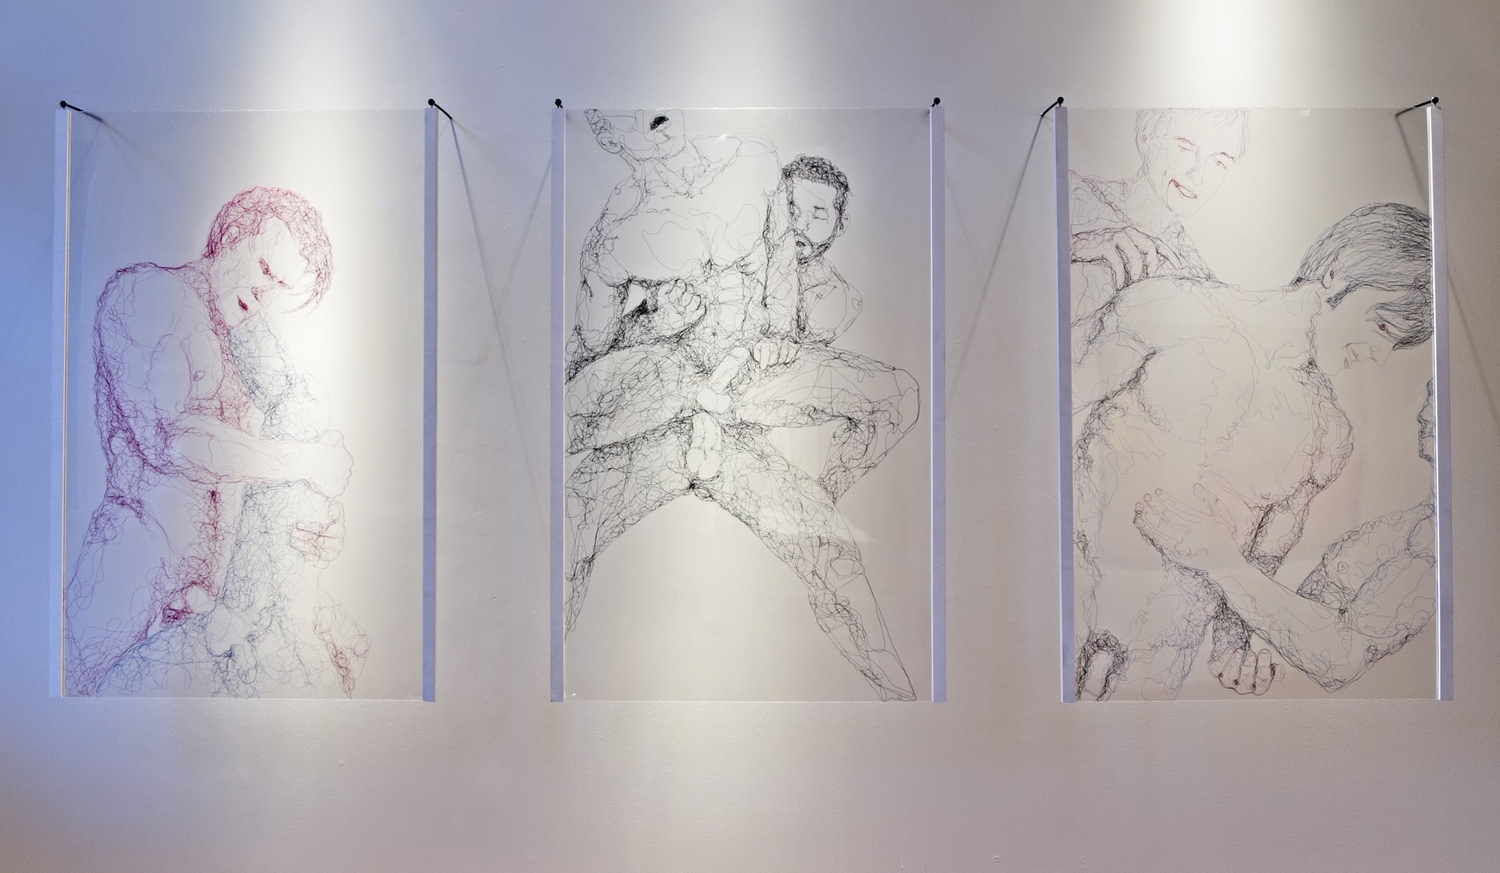  Three panels of thread art depicting nude males.